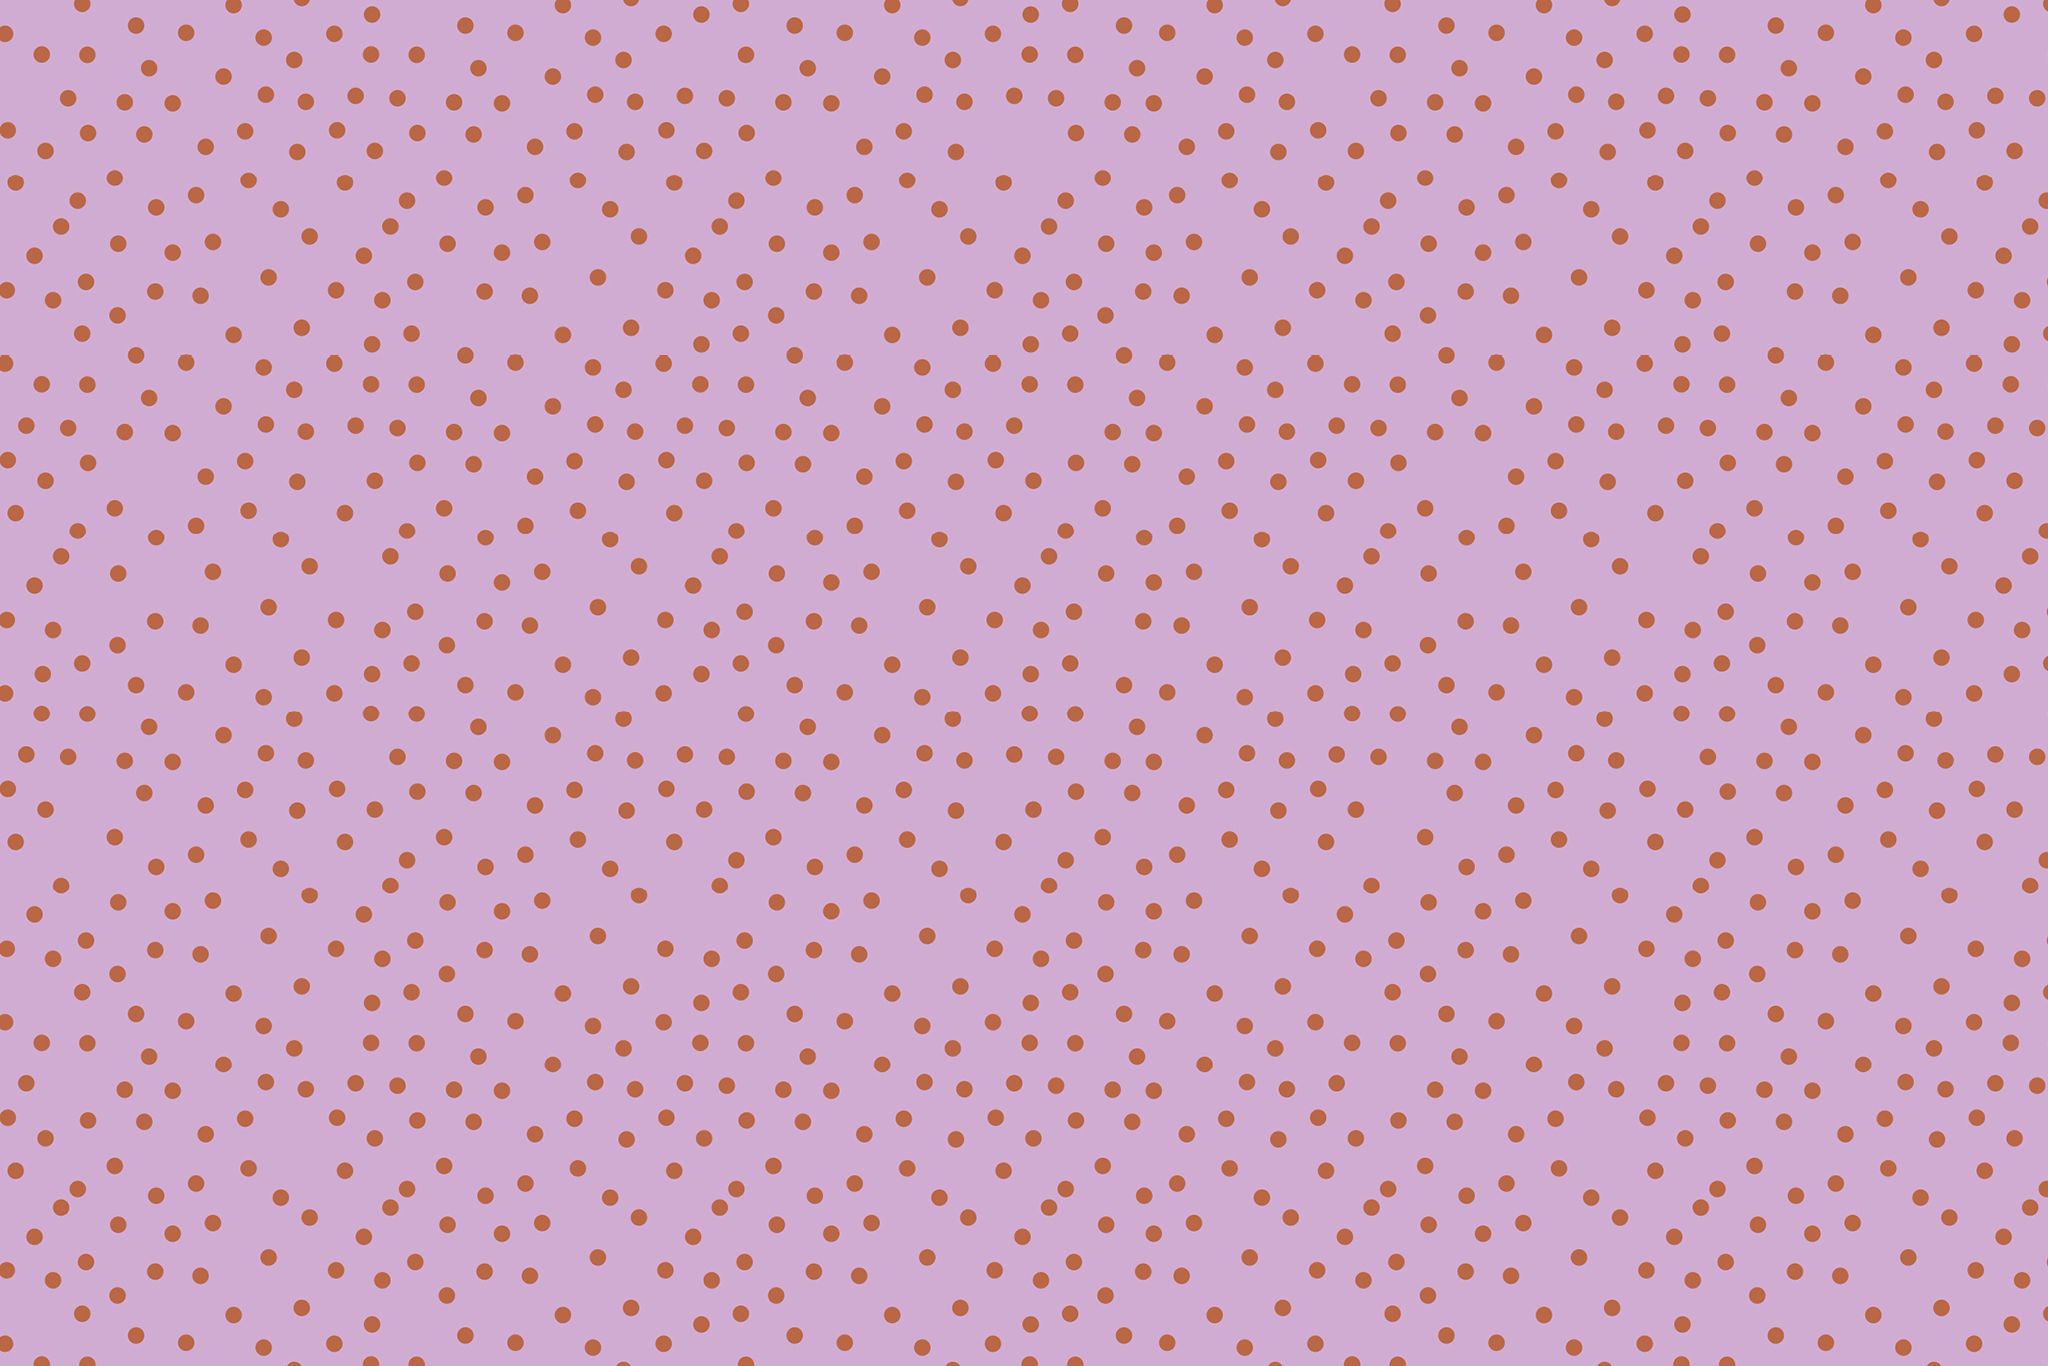 Polka dot Print Wallpapers for desktop and phone